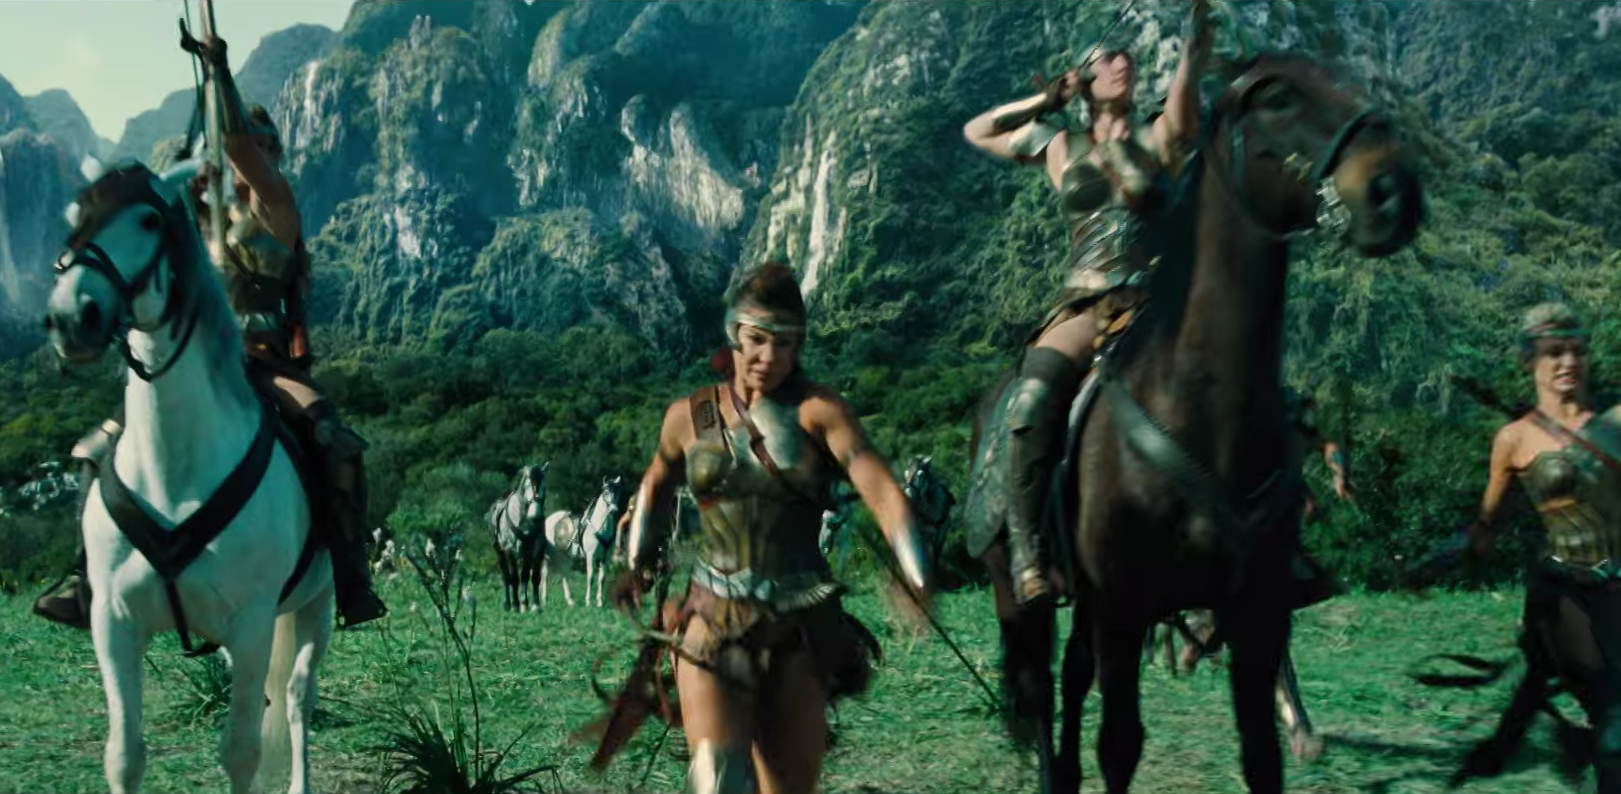 Meet Wonder Woman’s Amazon Warriors.